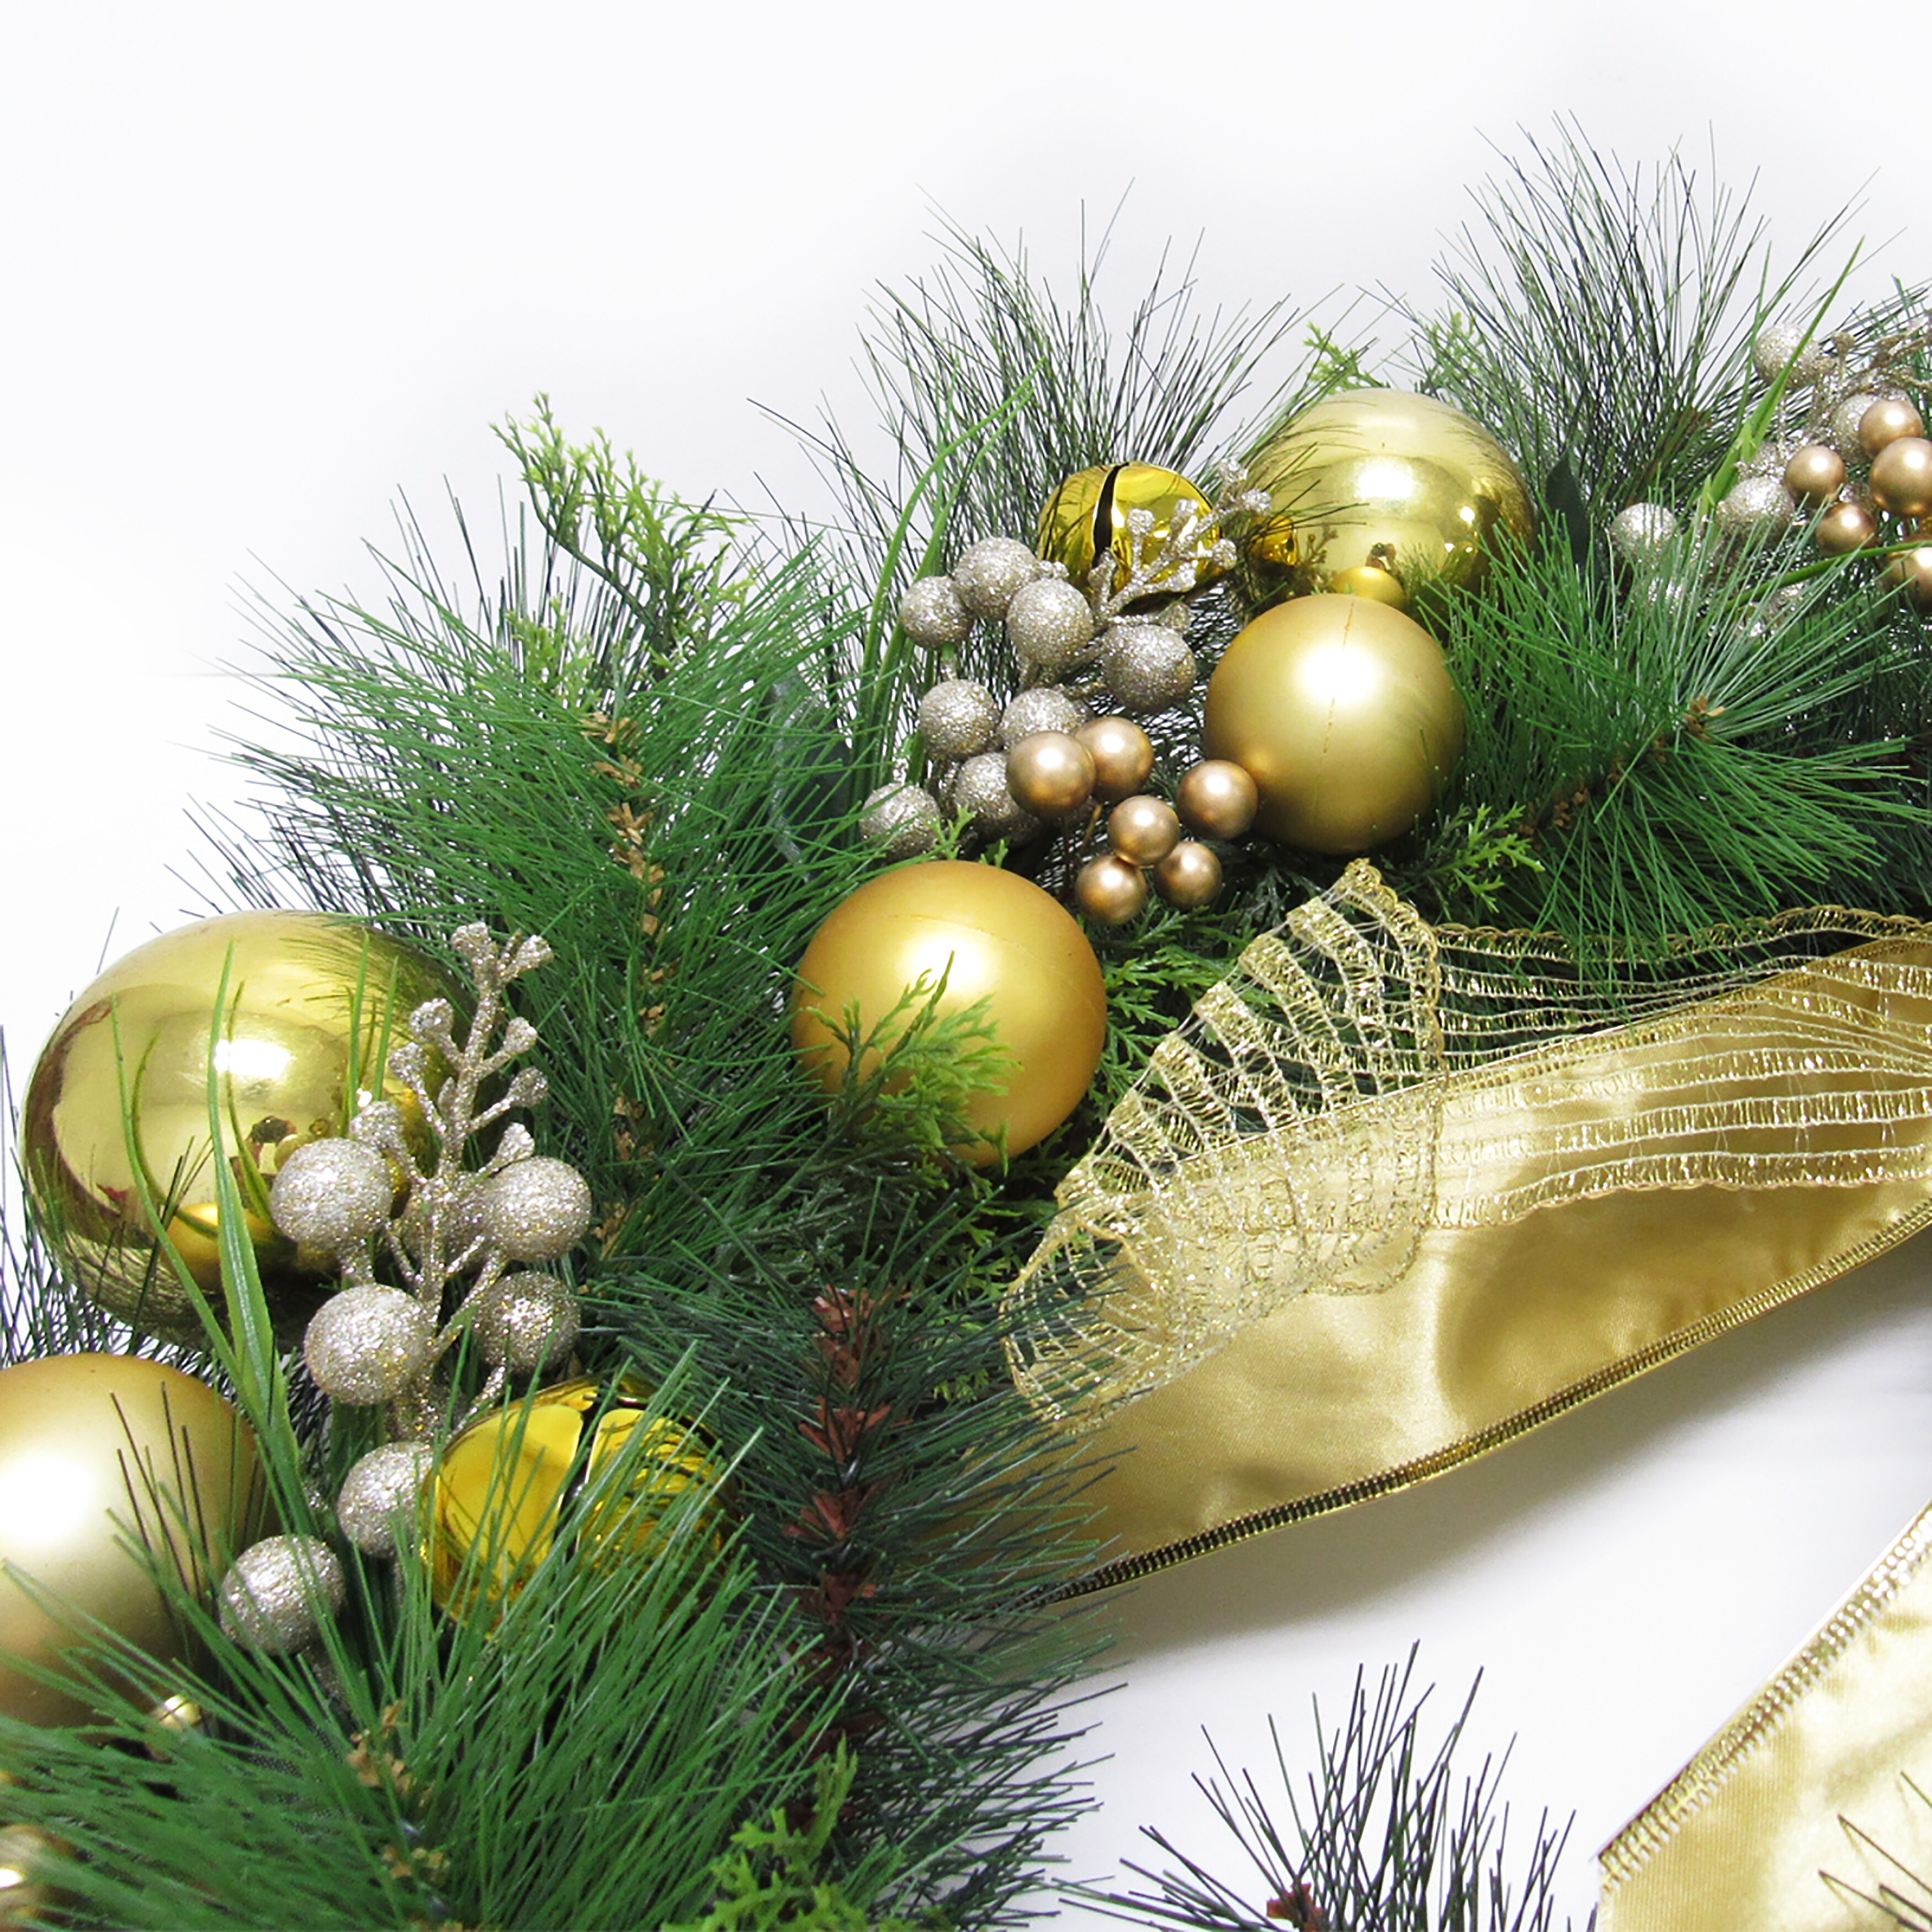 40cm Christmas Wreath Deluxe Pre-Lit LED Xmas Festive Display Light Ornament 